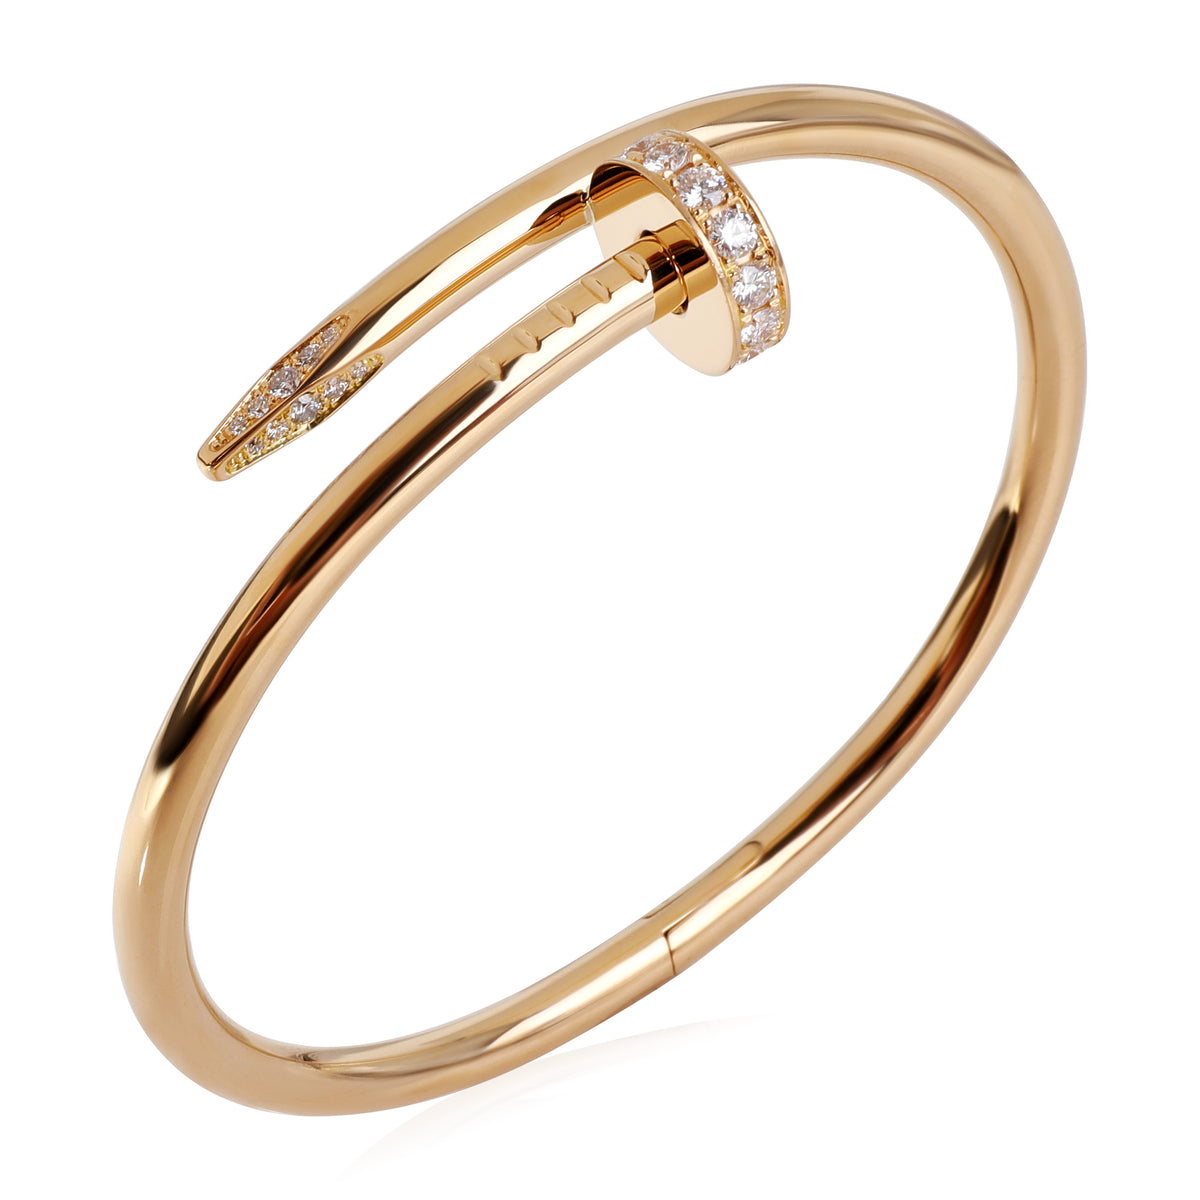 Cartier Juste un Clou Diamond Bracelet in 18K Yellow Gold (Size 15)